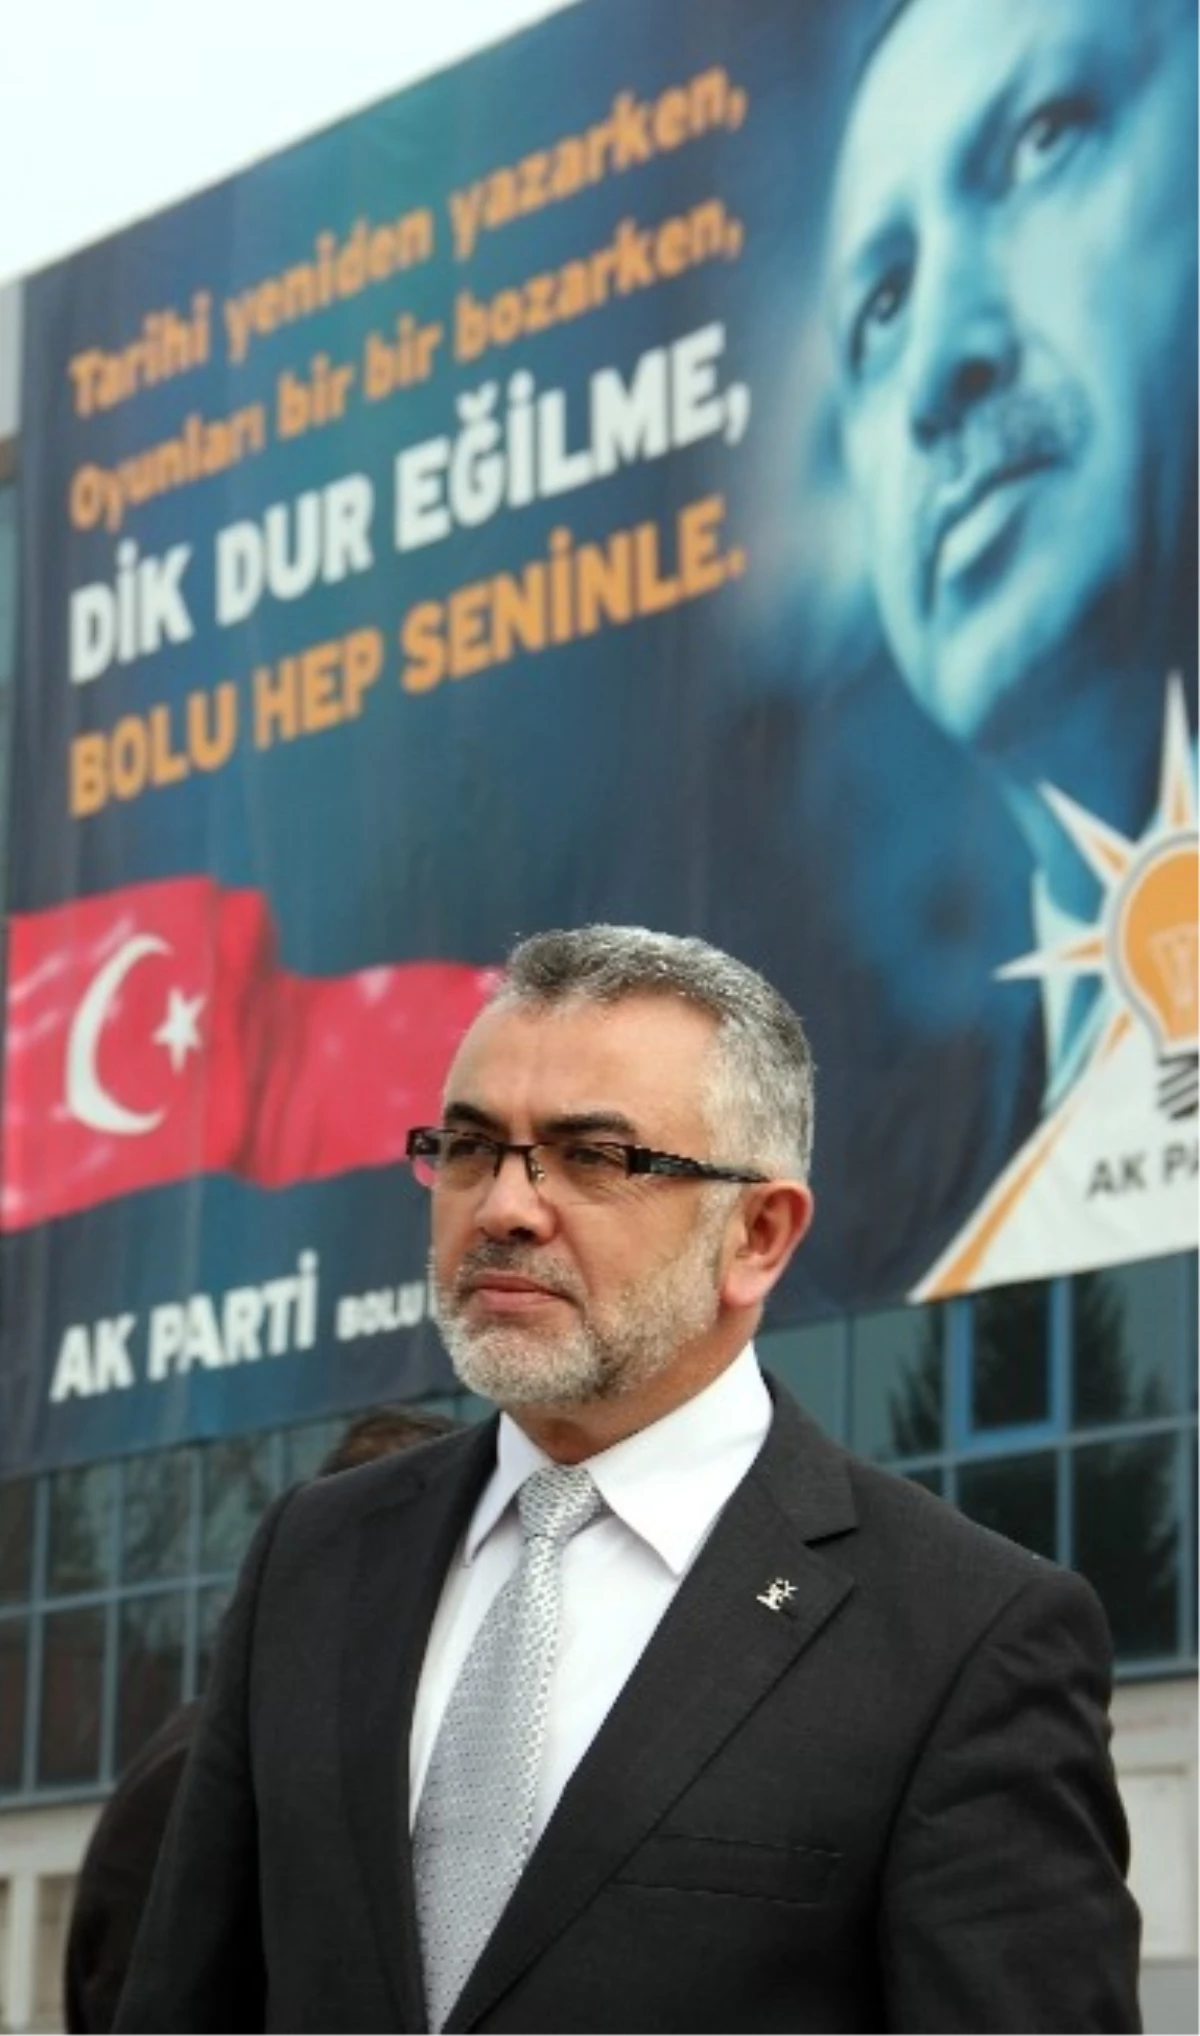 AK Parti İl Başkanlığı Tartışmalı Pankartı Kaldırdı